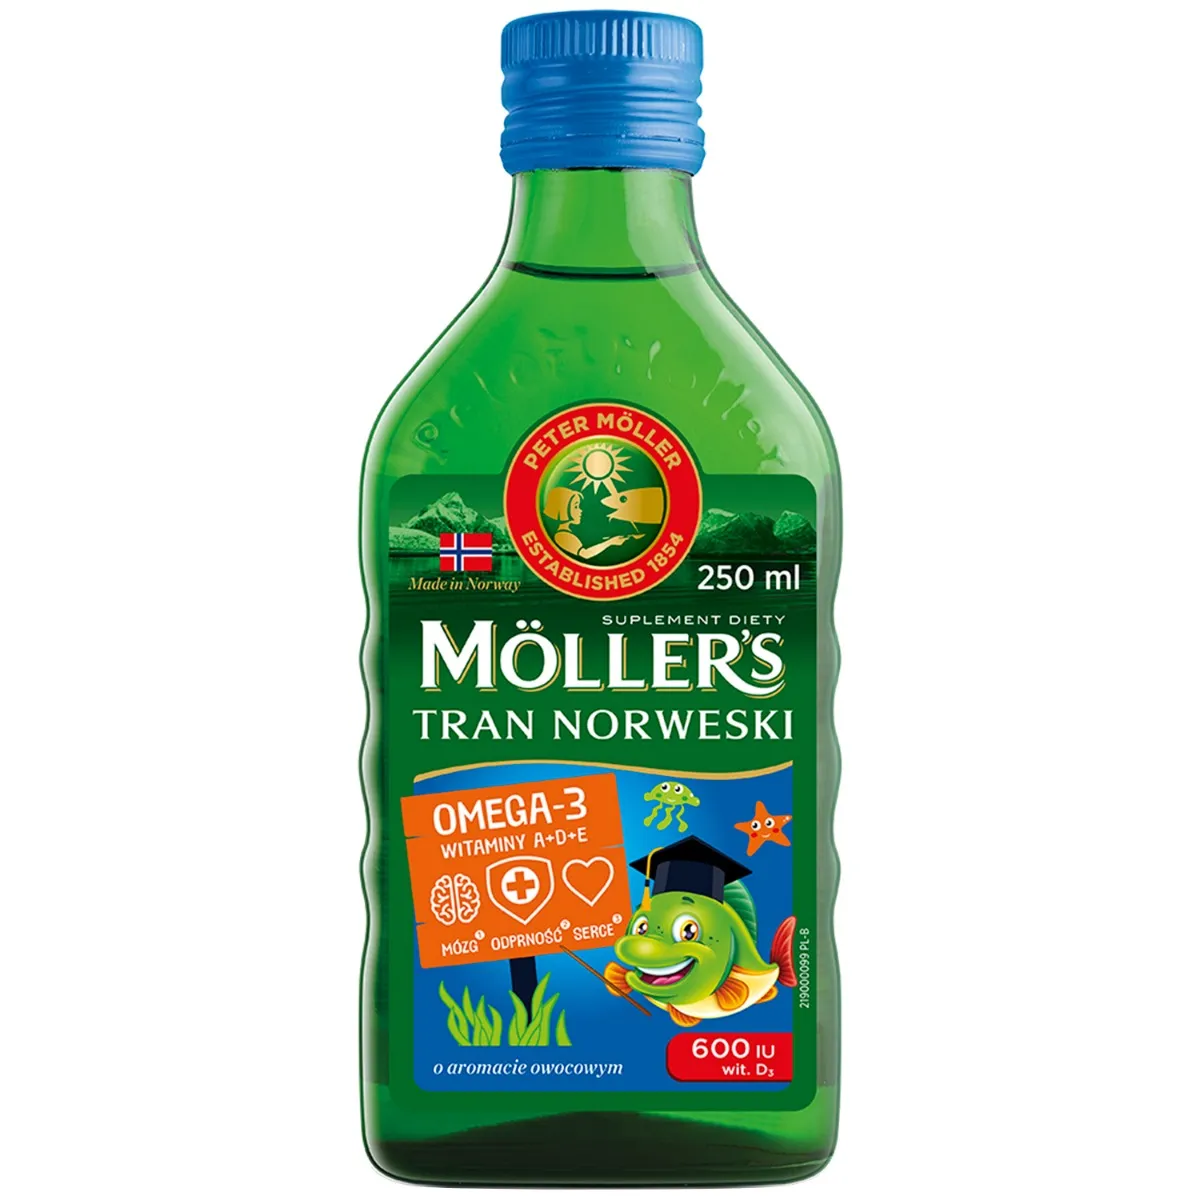 Moller's Tran Norweski, suplement diety, smak owocowy, 250 ml